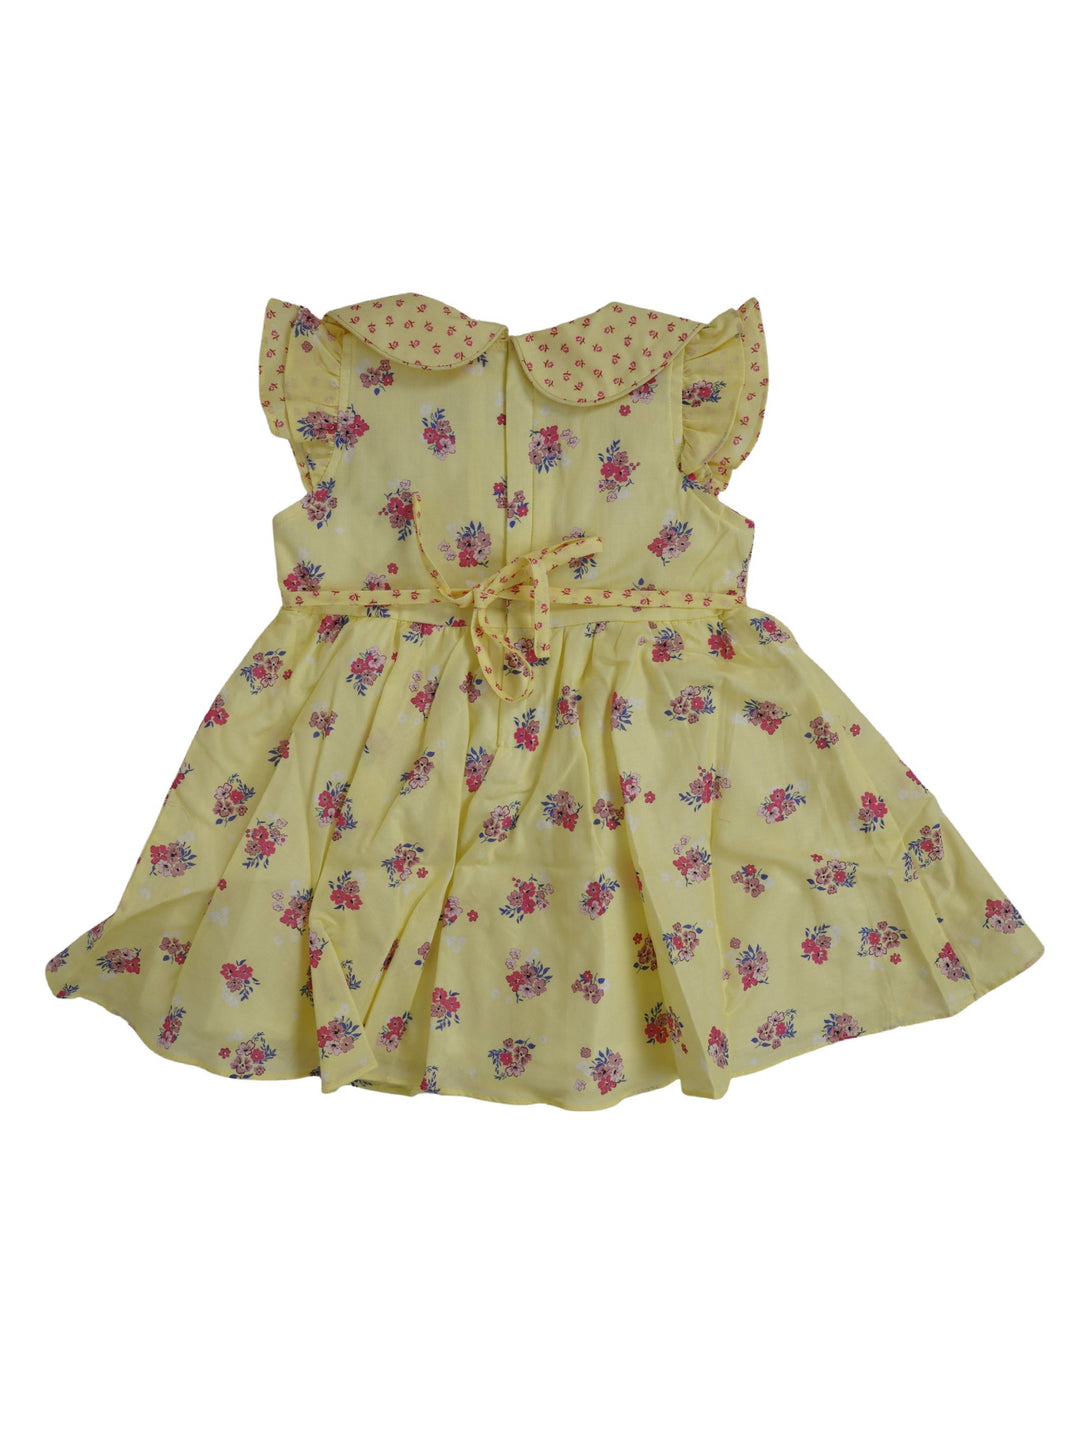 The Nesavu Baby Frock / Jhabla Pocket Dress For Your Lil Girls With Peter Pan Collar psr silks Nesavu